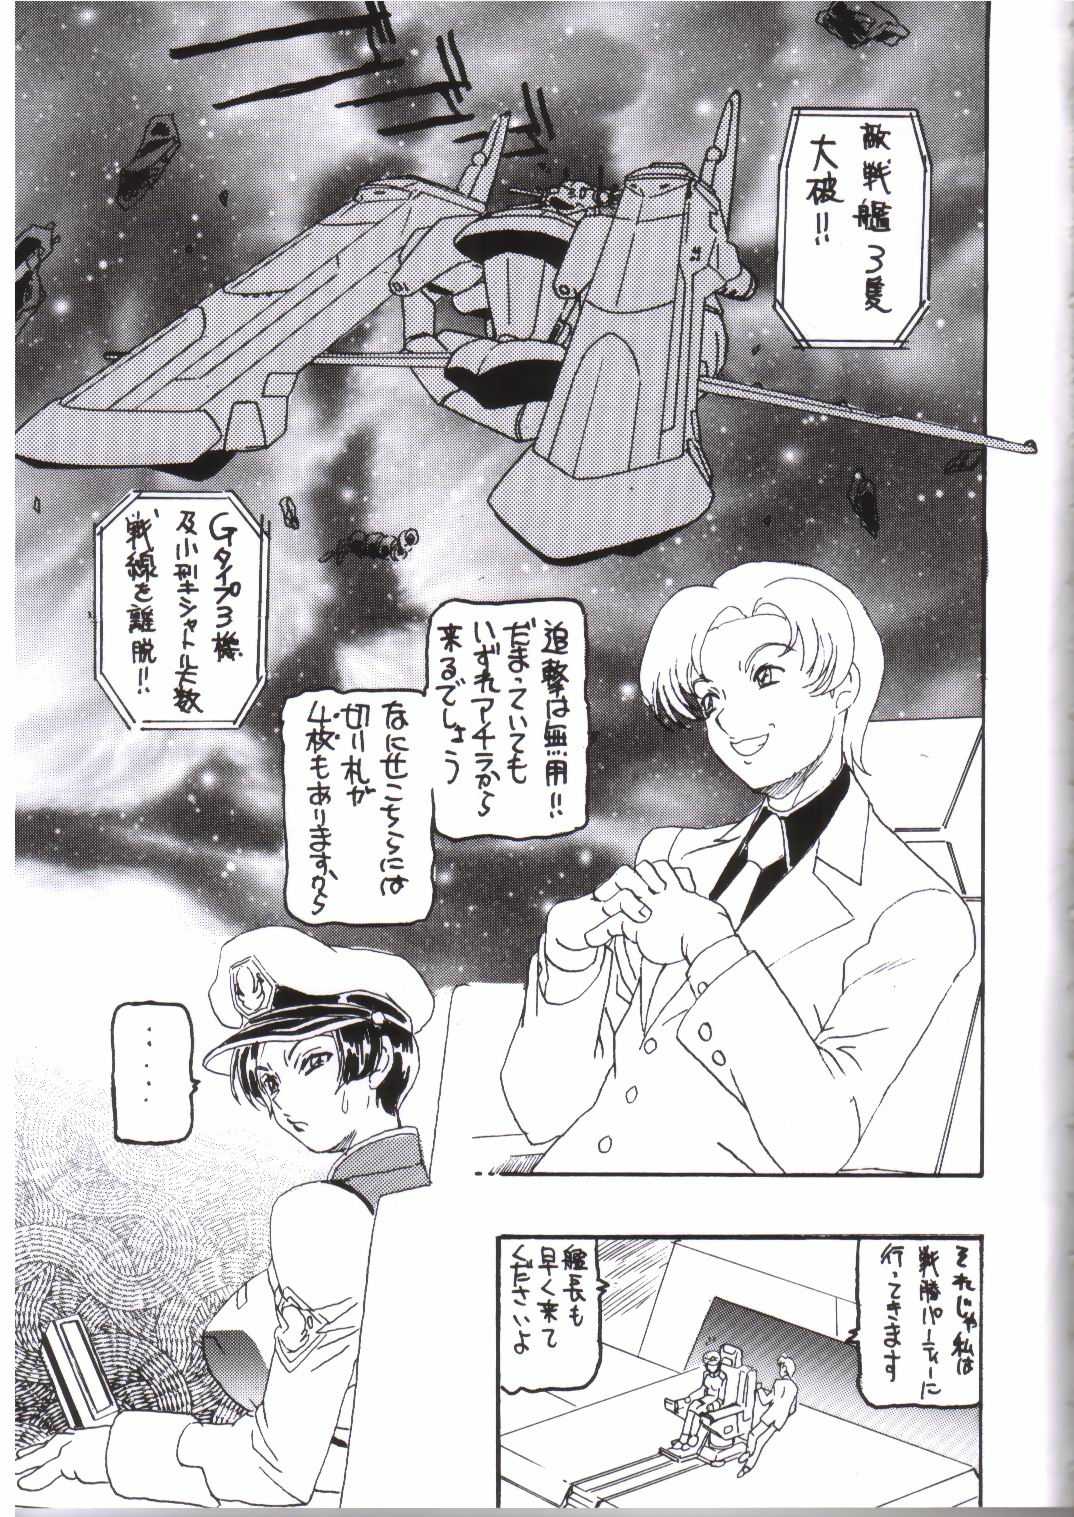 [Dynamite Honey] Moon Shine 9 [Gundam Seed] 